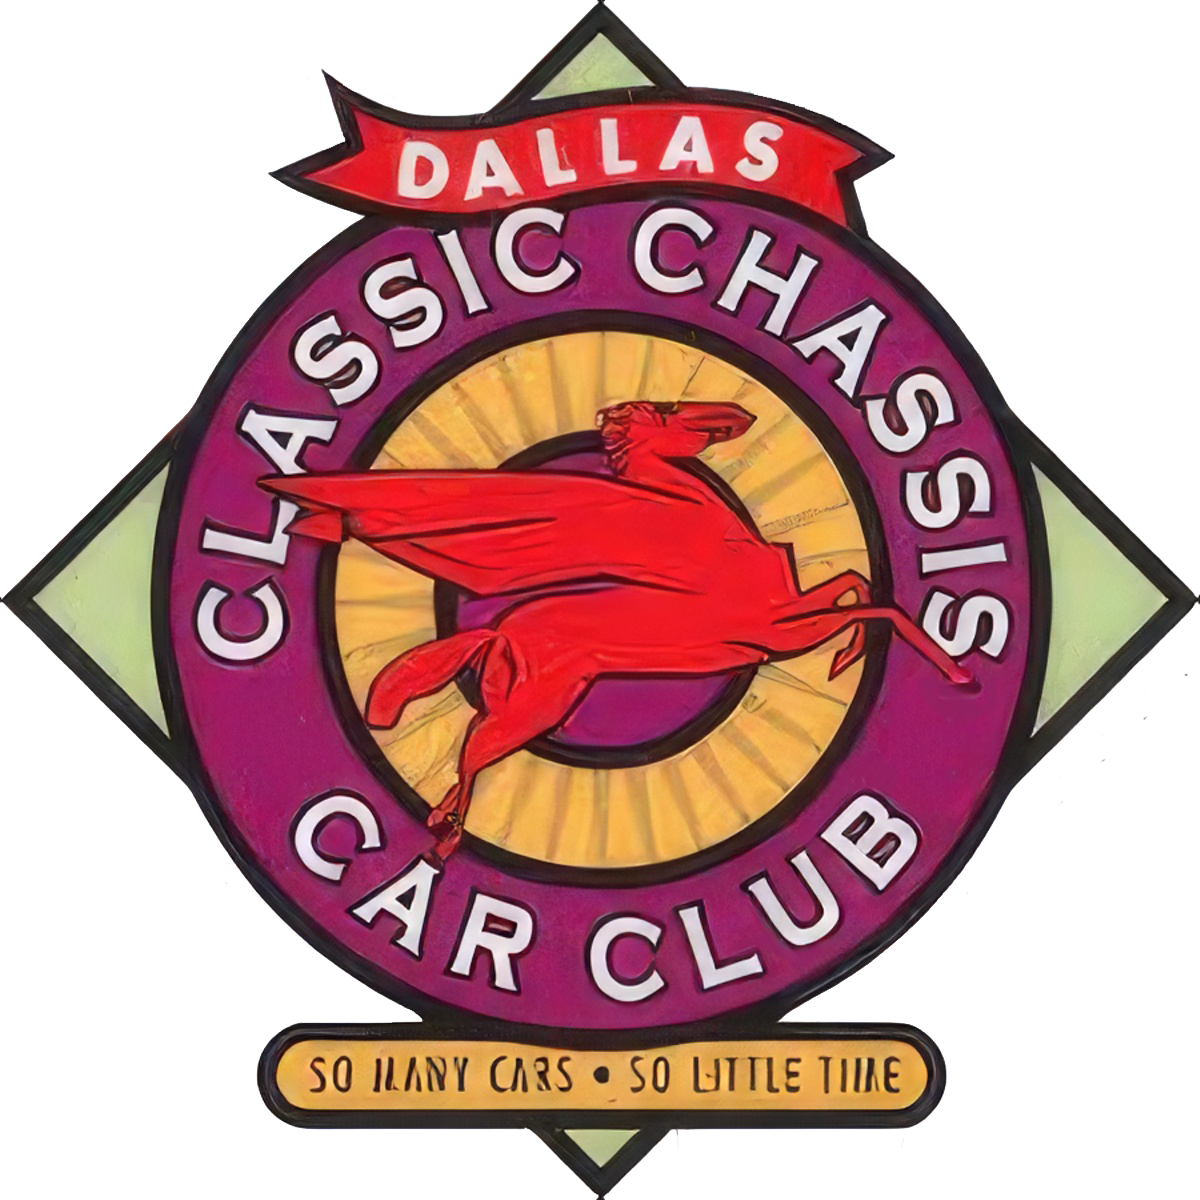 Classic Chassis Car Club of Dallas